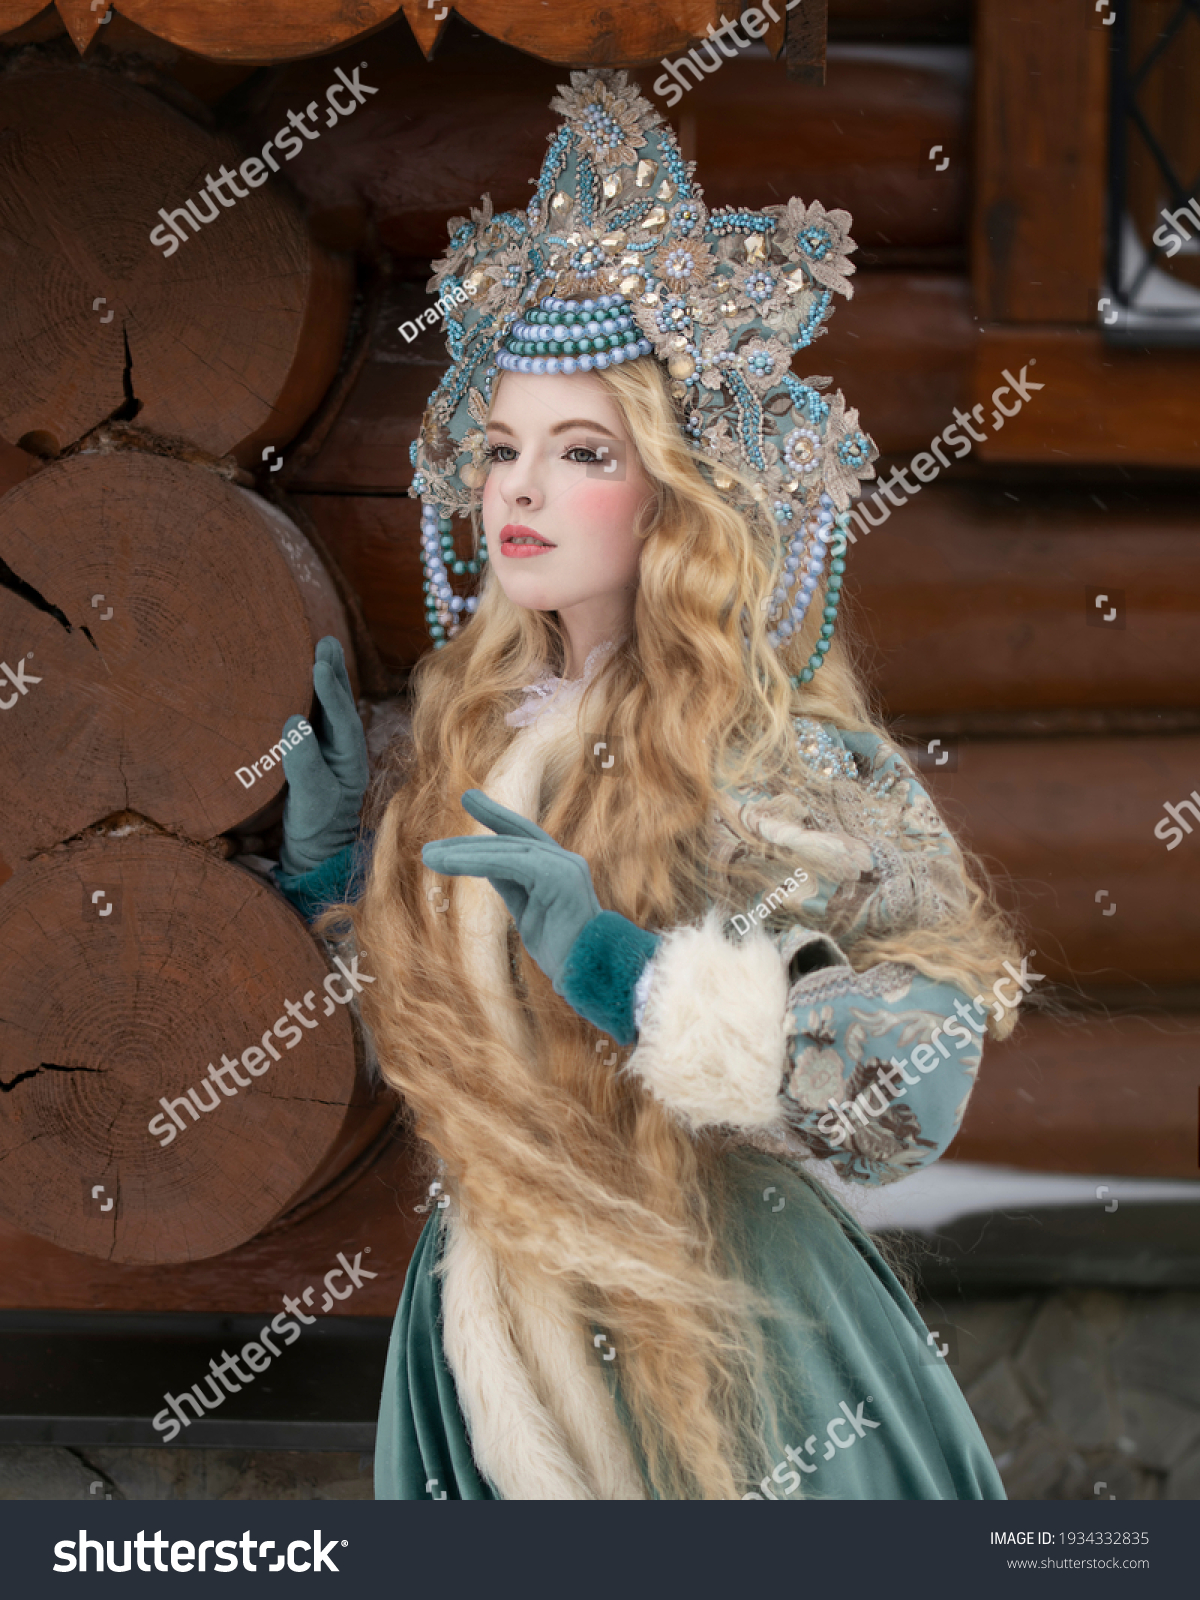 Kokoshnik,traditional Russian headdress "Fantasy" little 